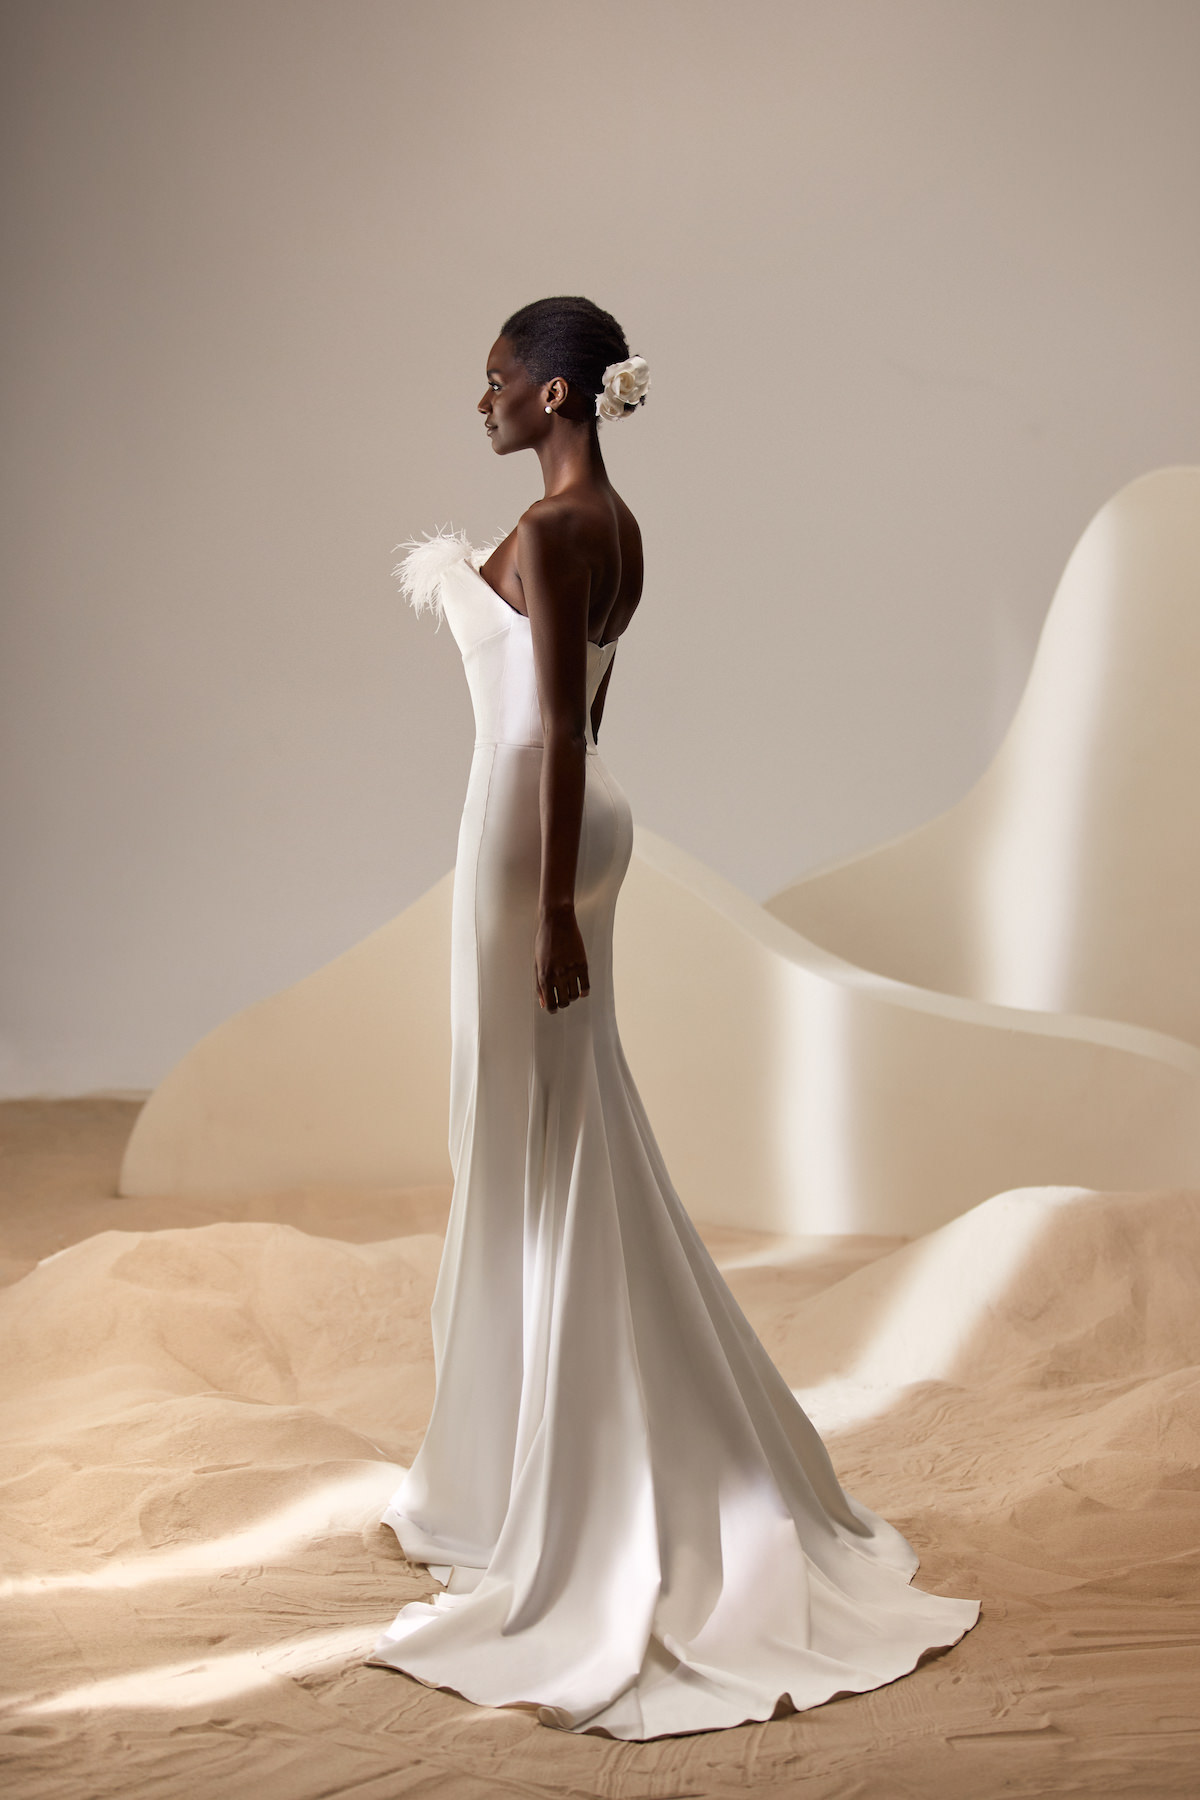 Wedding Dress by Milla Nova - Amara white lace